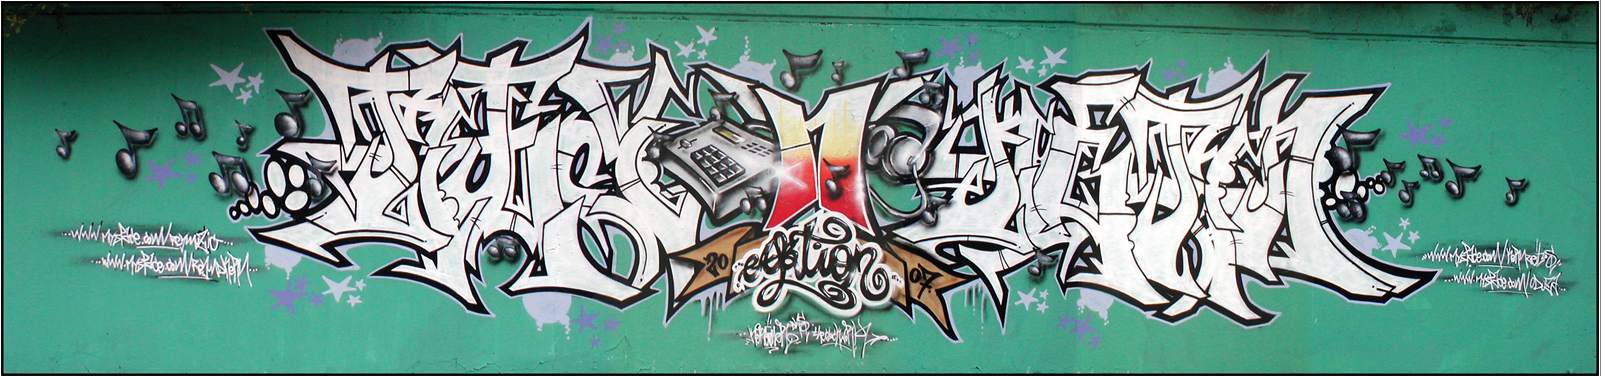 http://graffiti.org/clockwork/rey_kern_neuss_mai2007.jpg